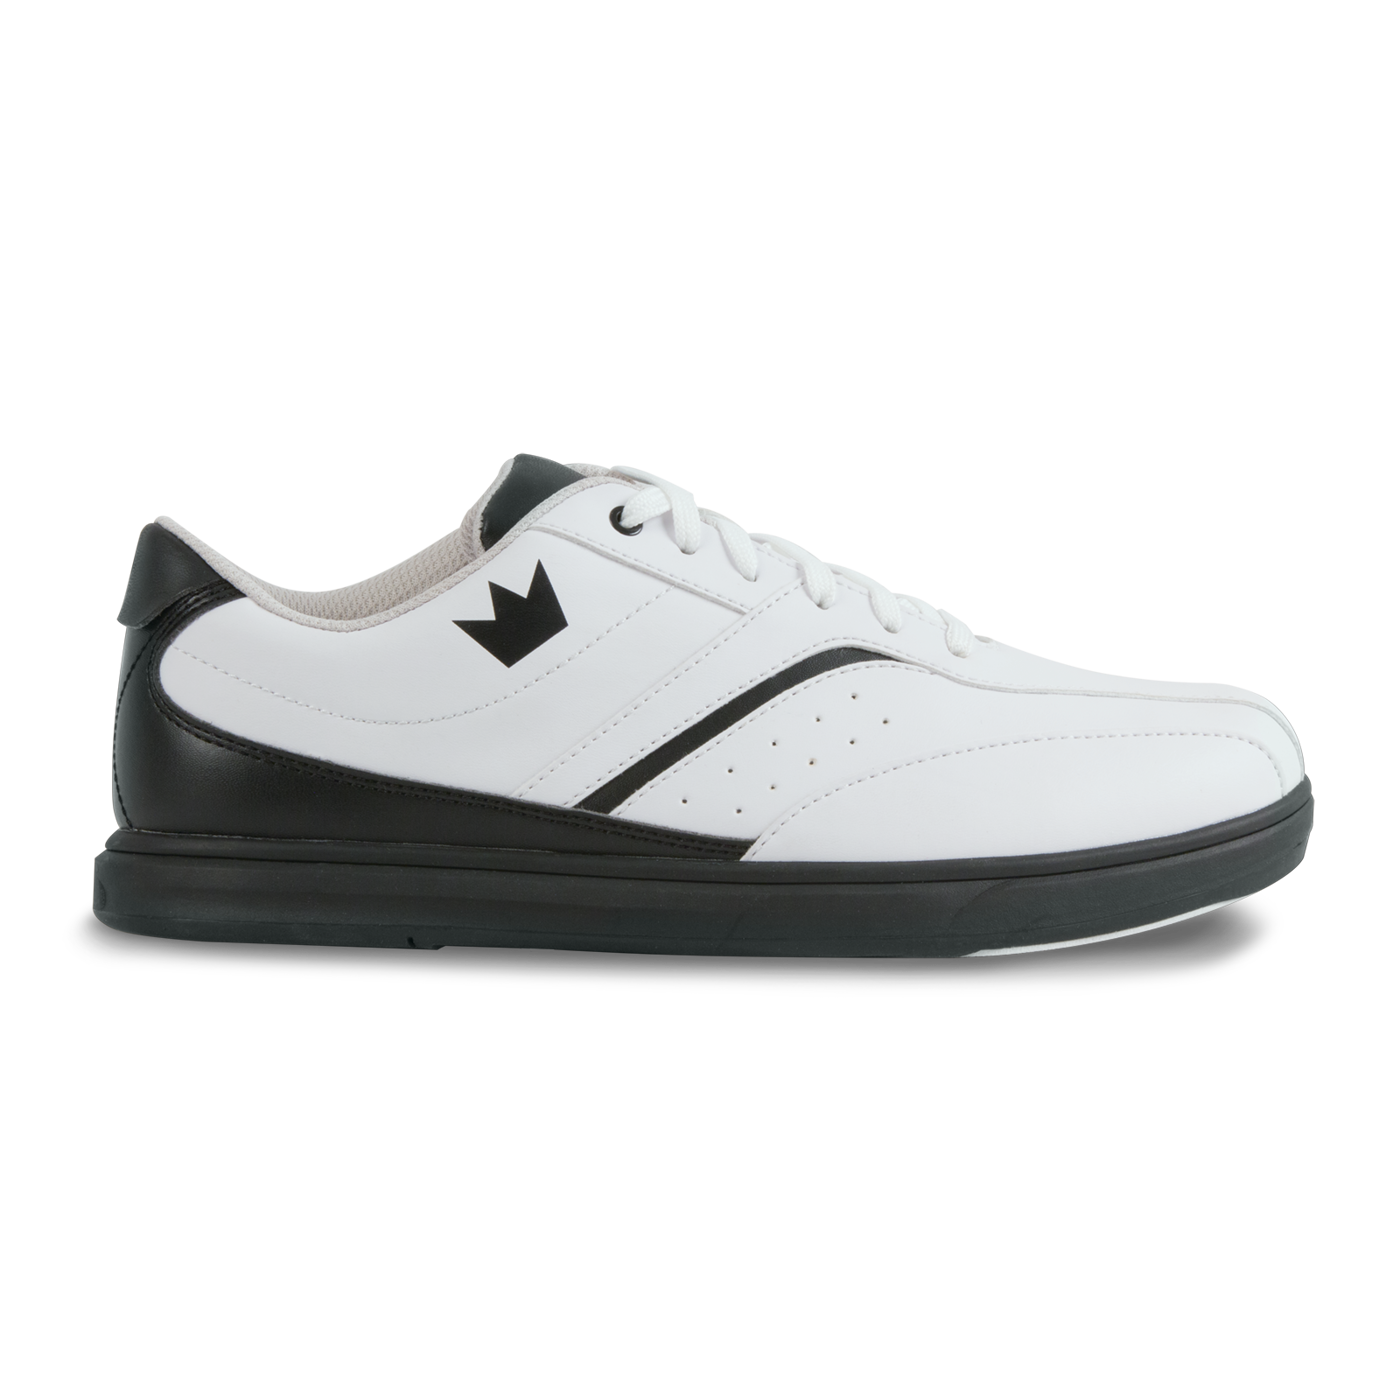 Brunswick Vapor White/Black Men's Bowling Shoes | AboveALLBowling.com